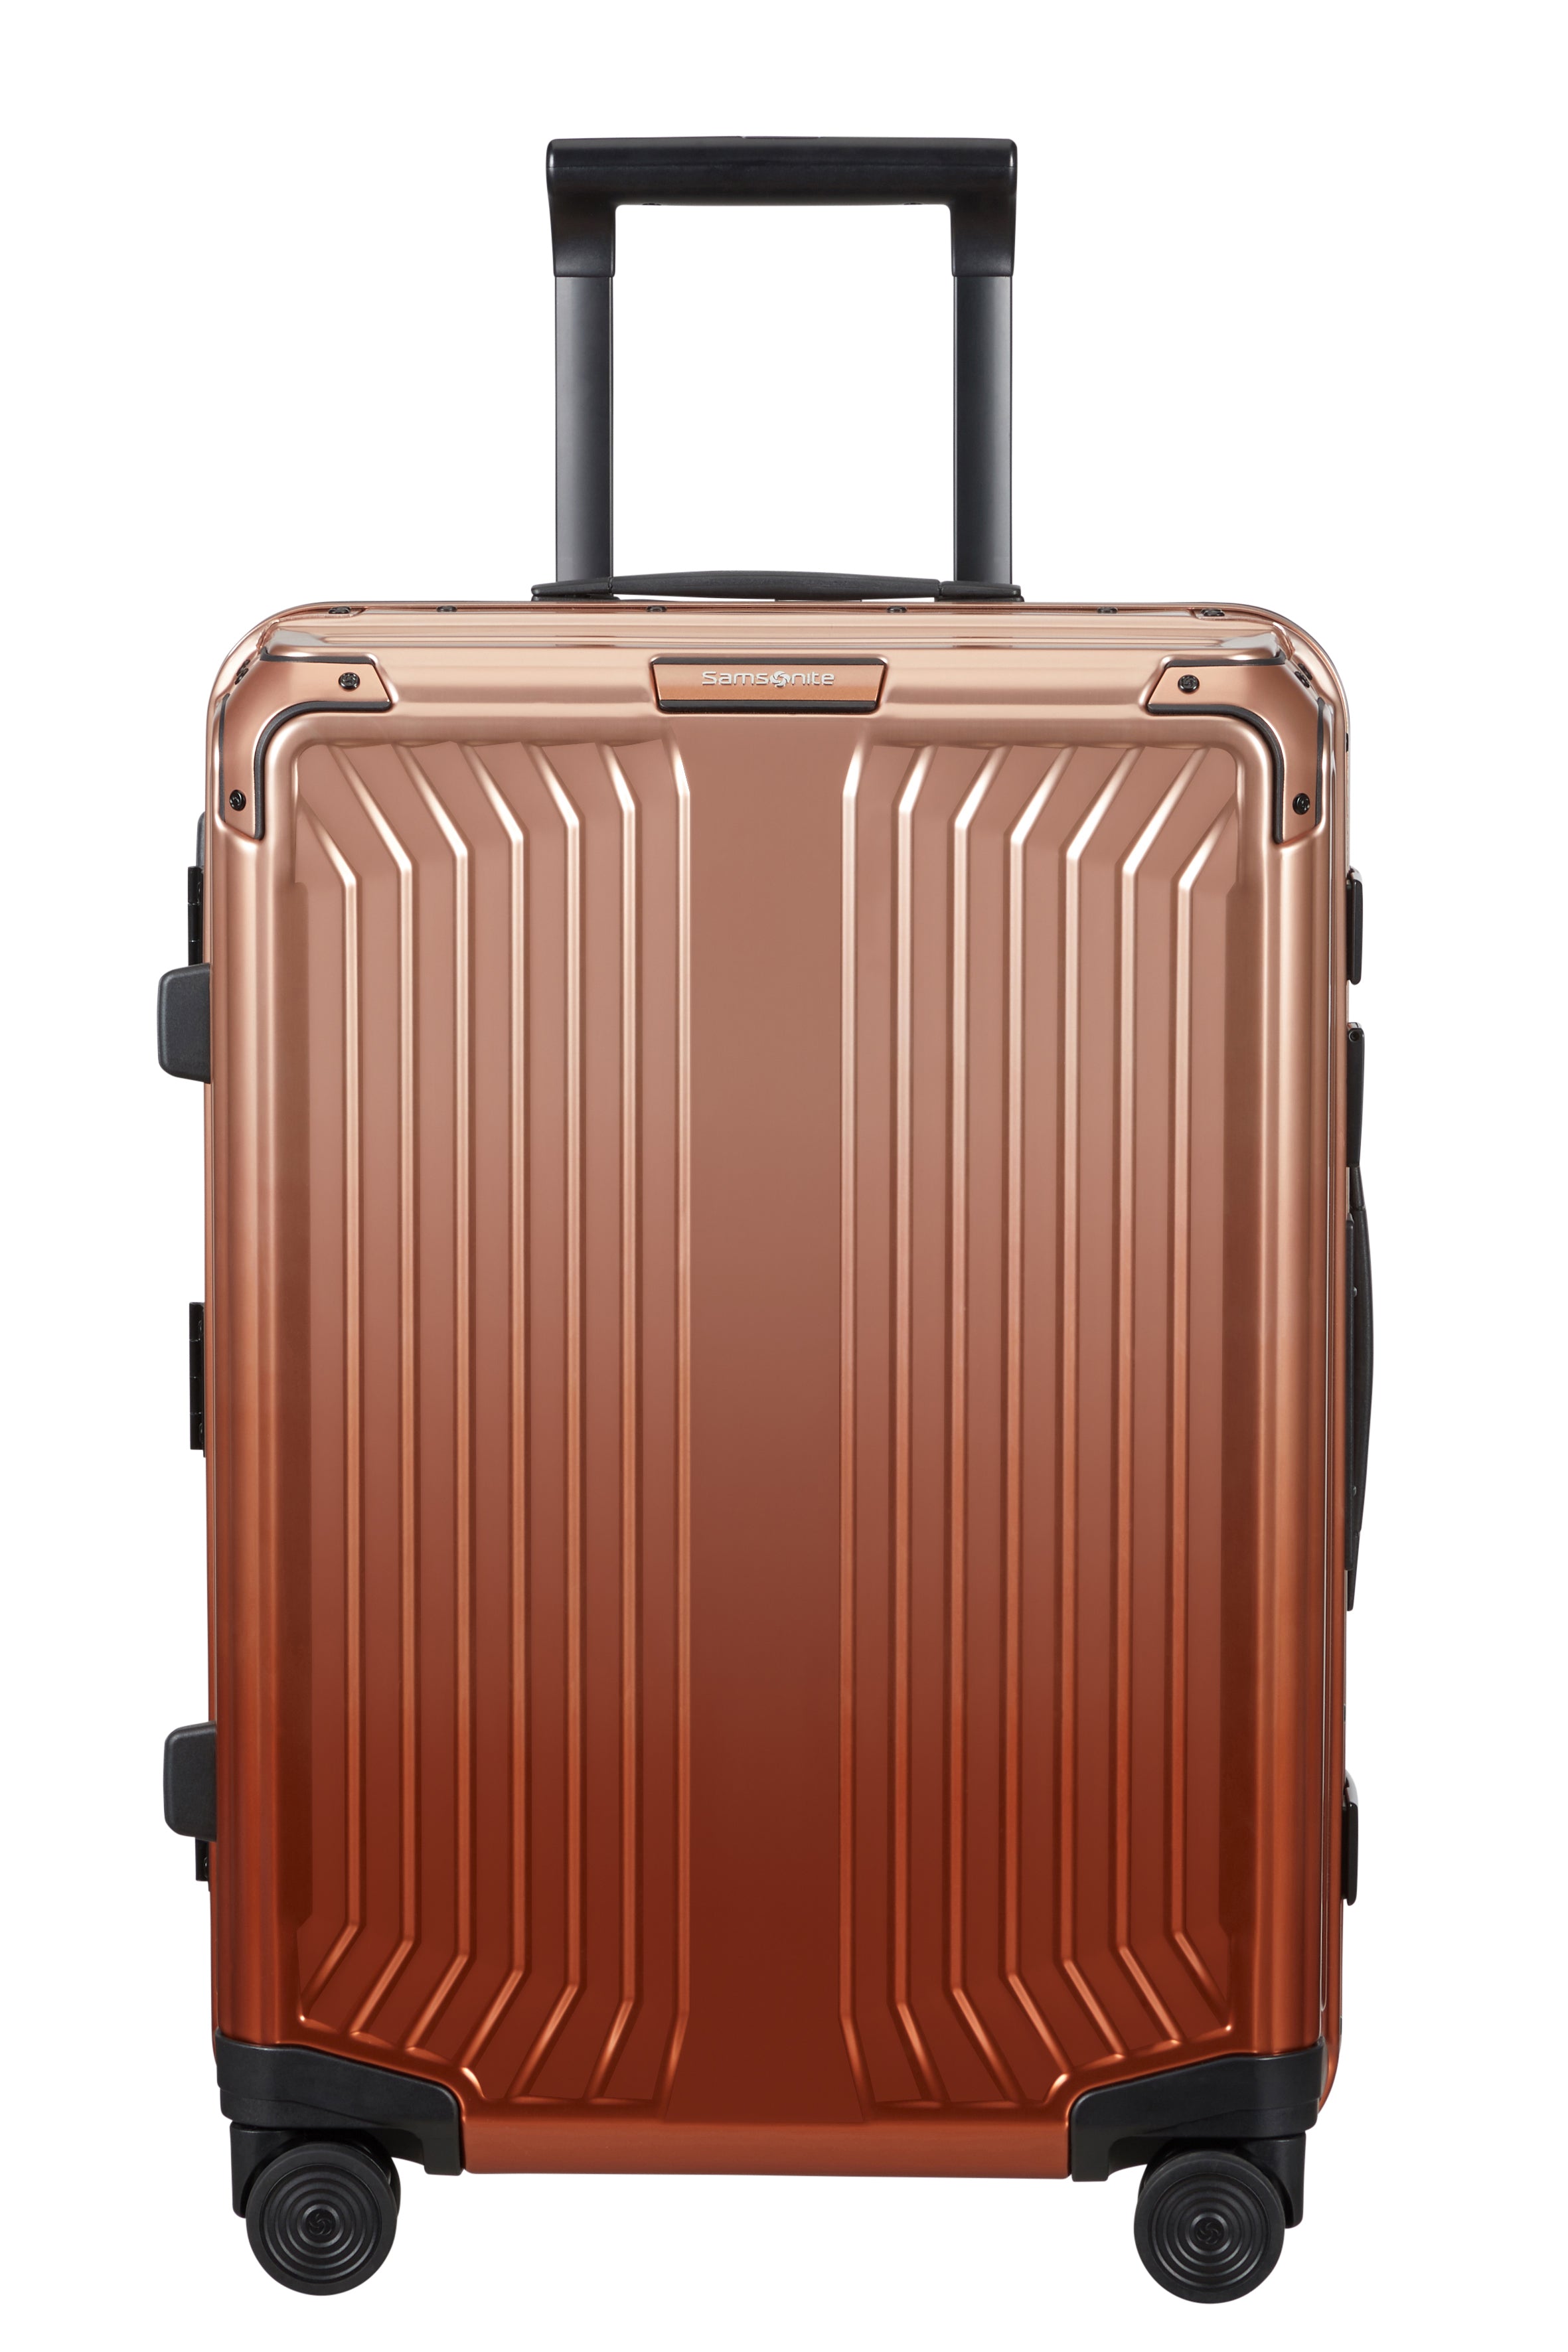 Samsonite - Lite Box ALU 55cm Small 4 Wheel Hard Suitcase - Gradient Copper-2